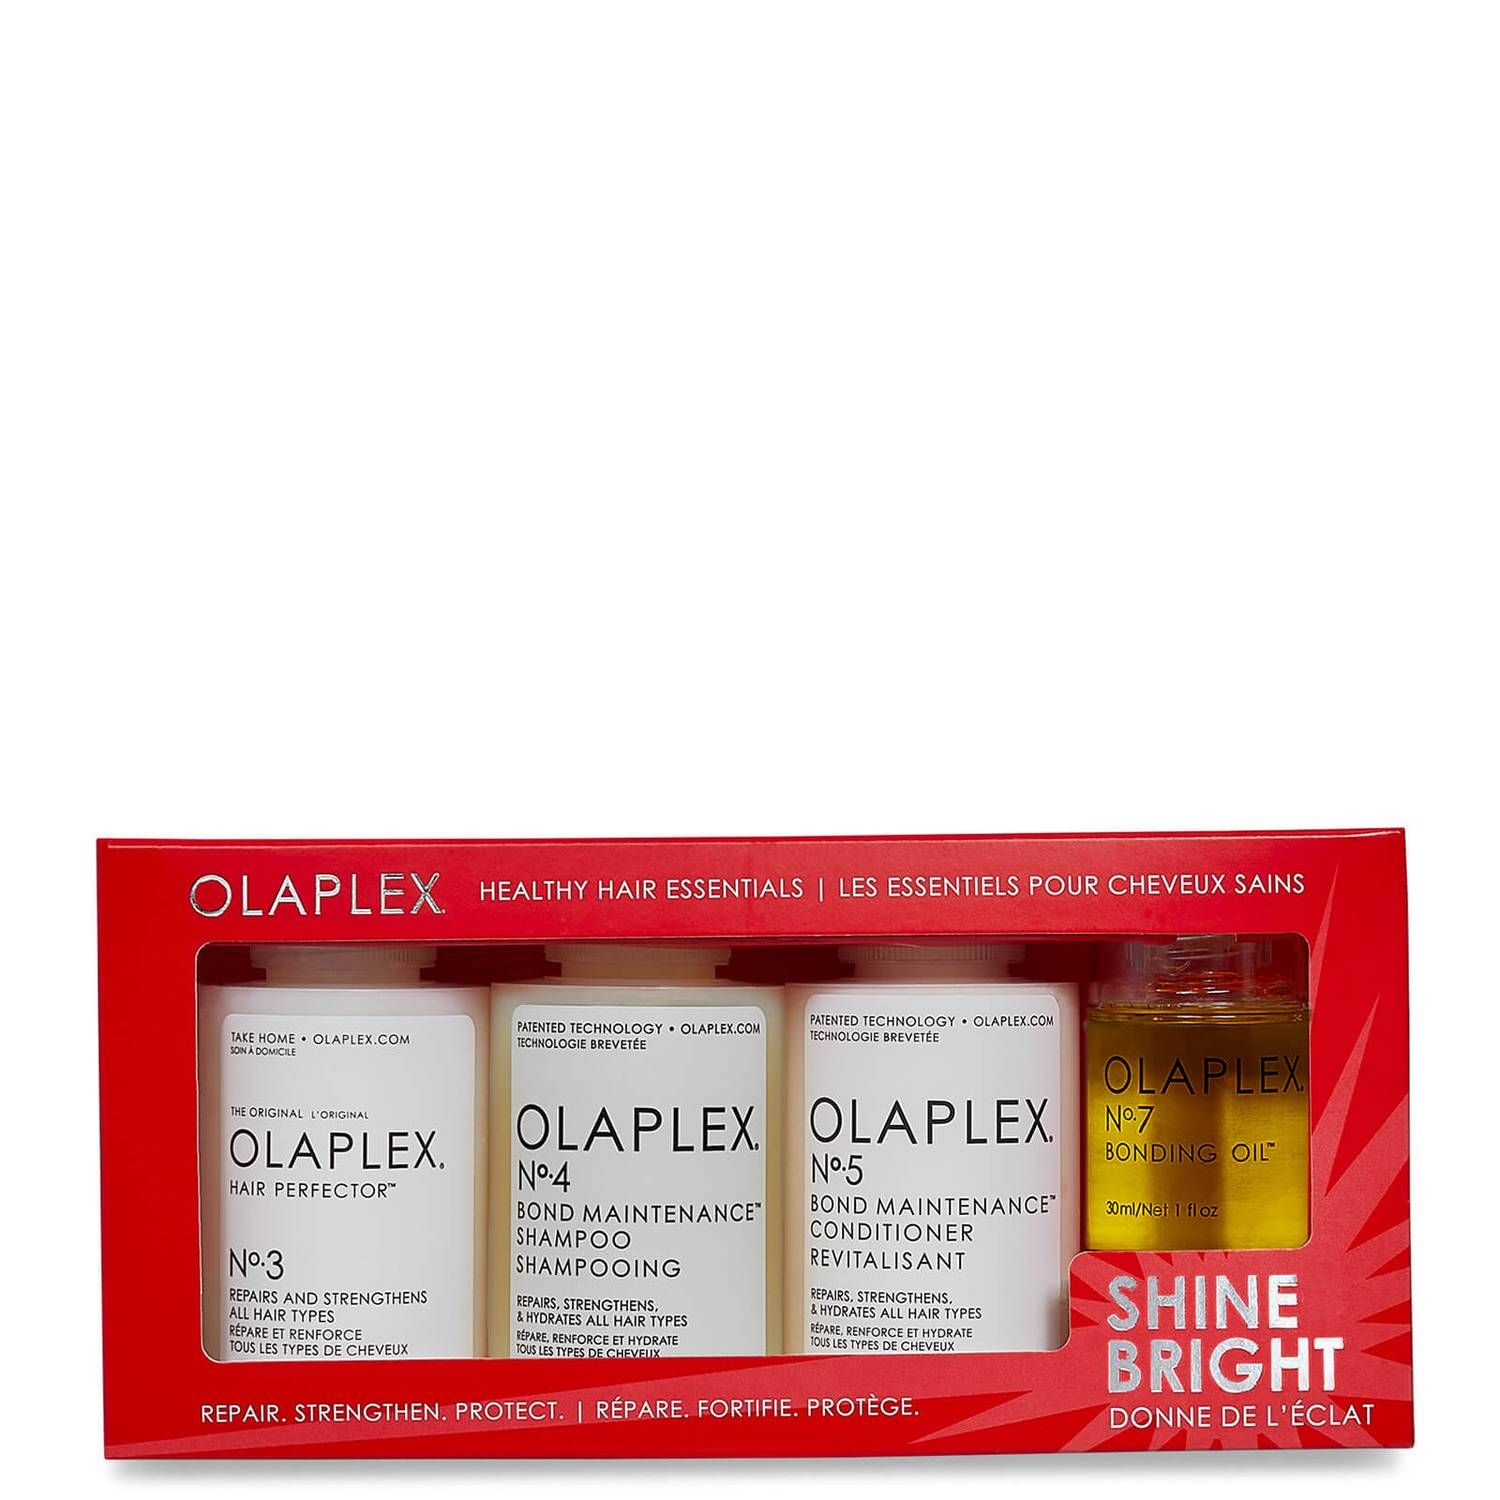 Olaplex Healthy Hair Essentials Kit - $84.00 Value | Dermstore